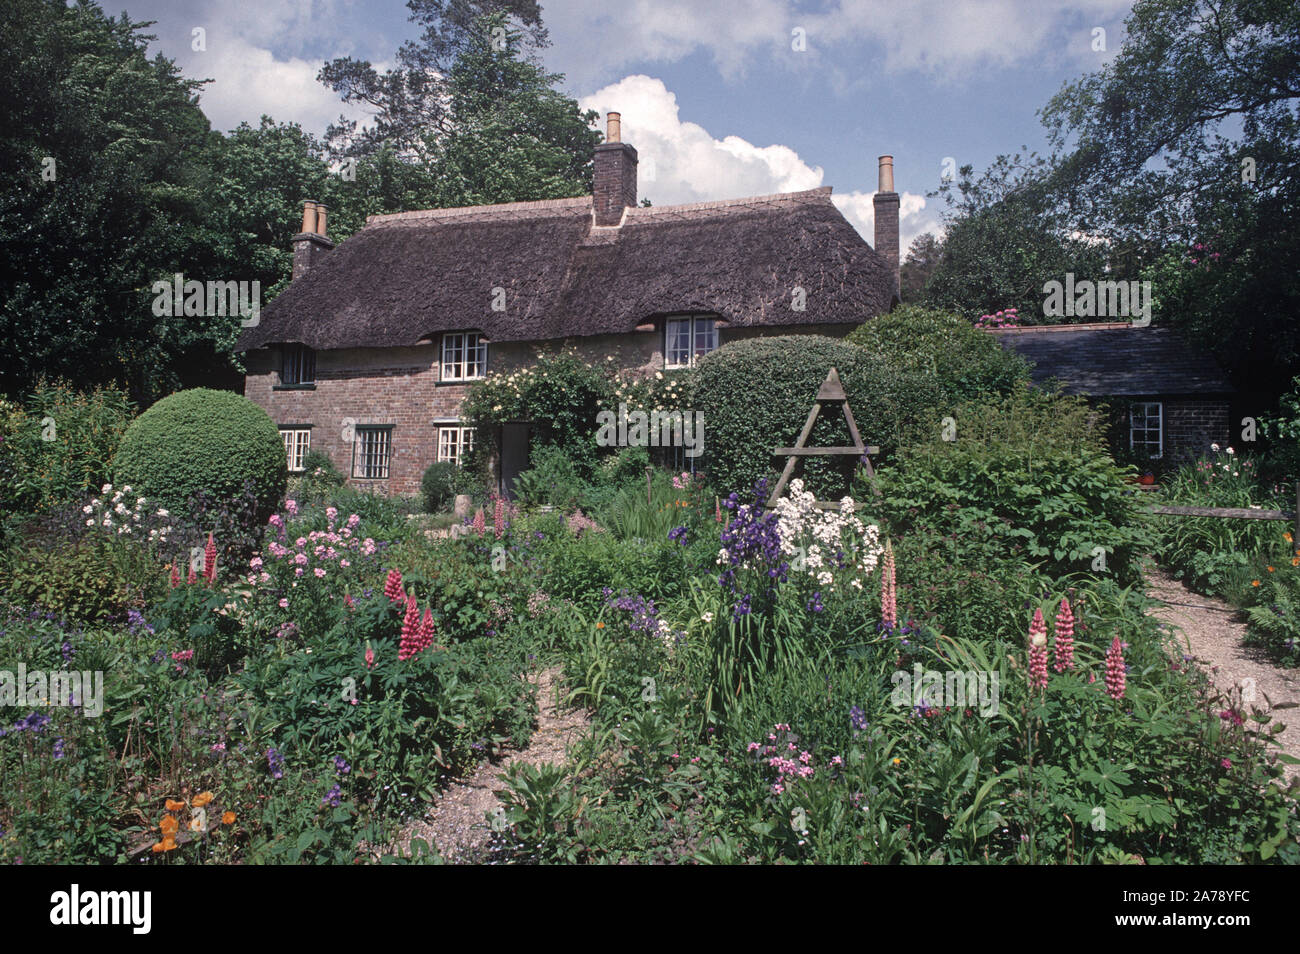 Thomas Hardy cottage, lugar de nacimiento del autor inglés Thomas Hardy, 1840, Mayor Bockhampton, Dorset, Inglaterra, Gran Bretaña Foto de stock